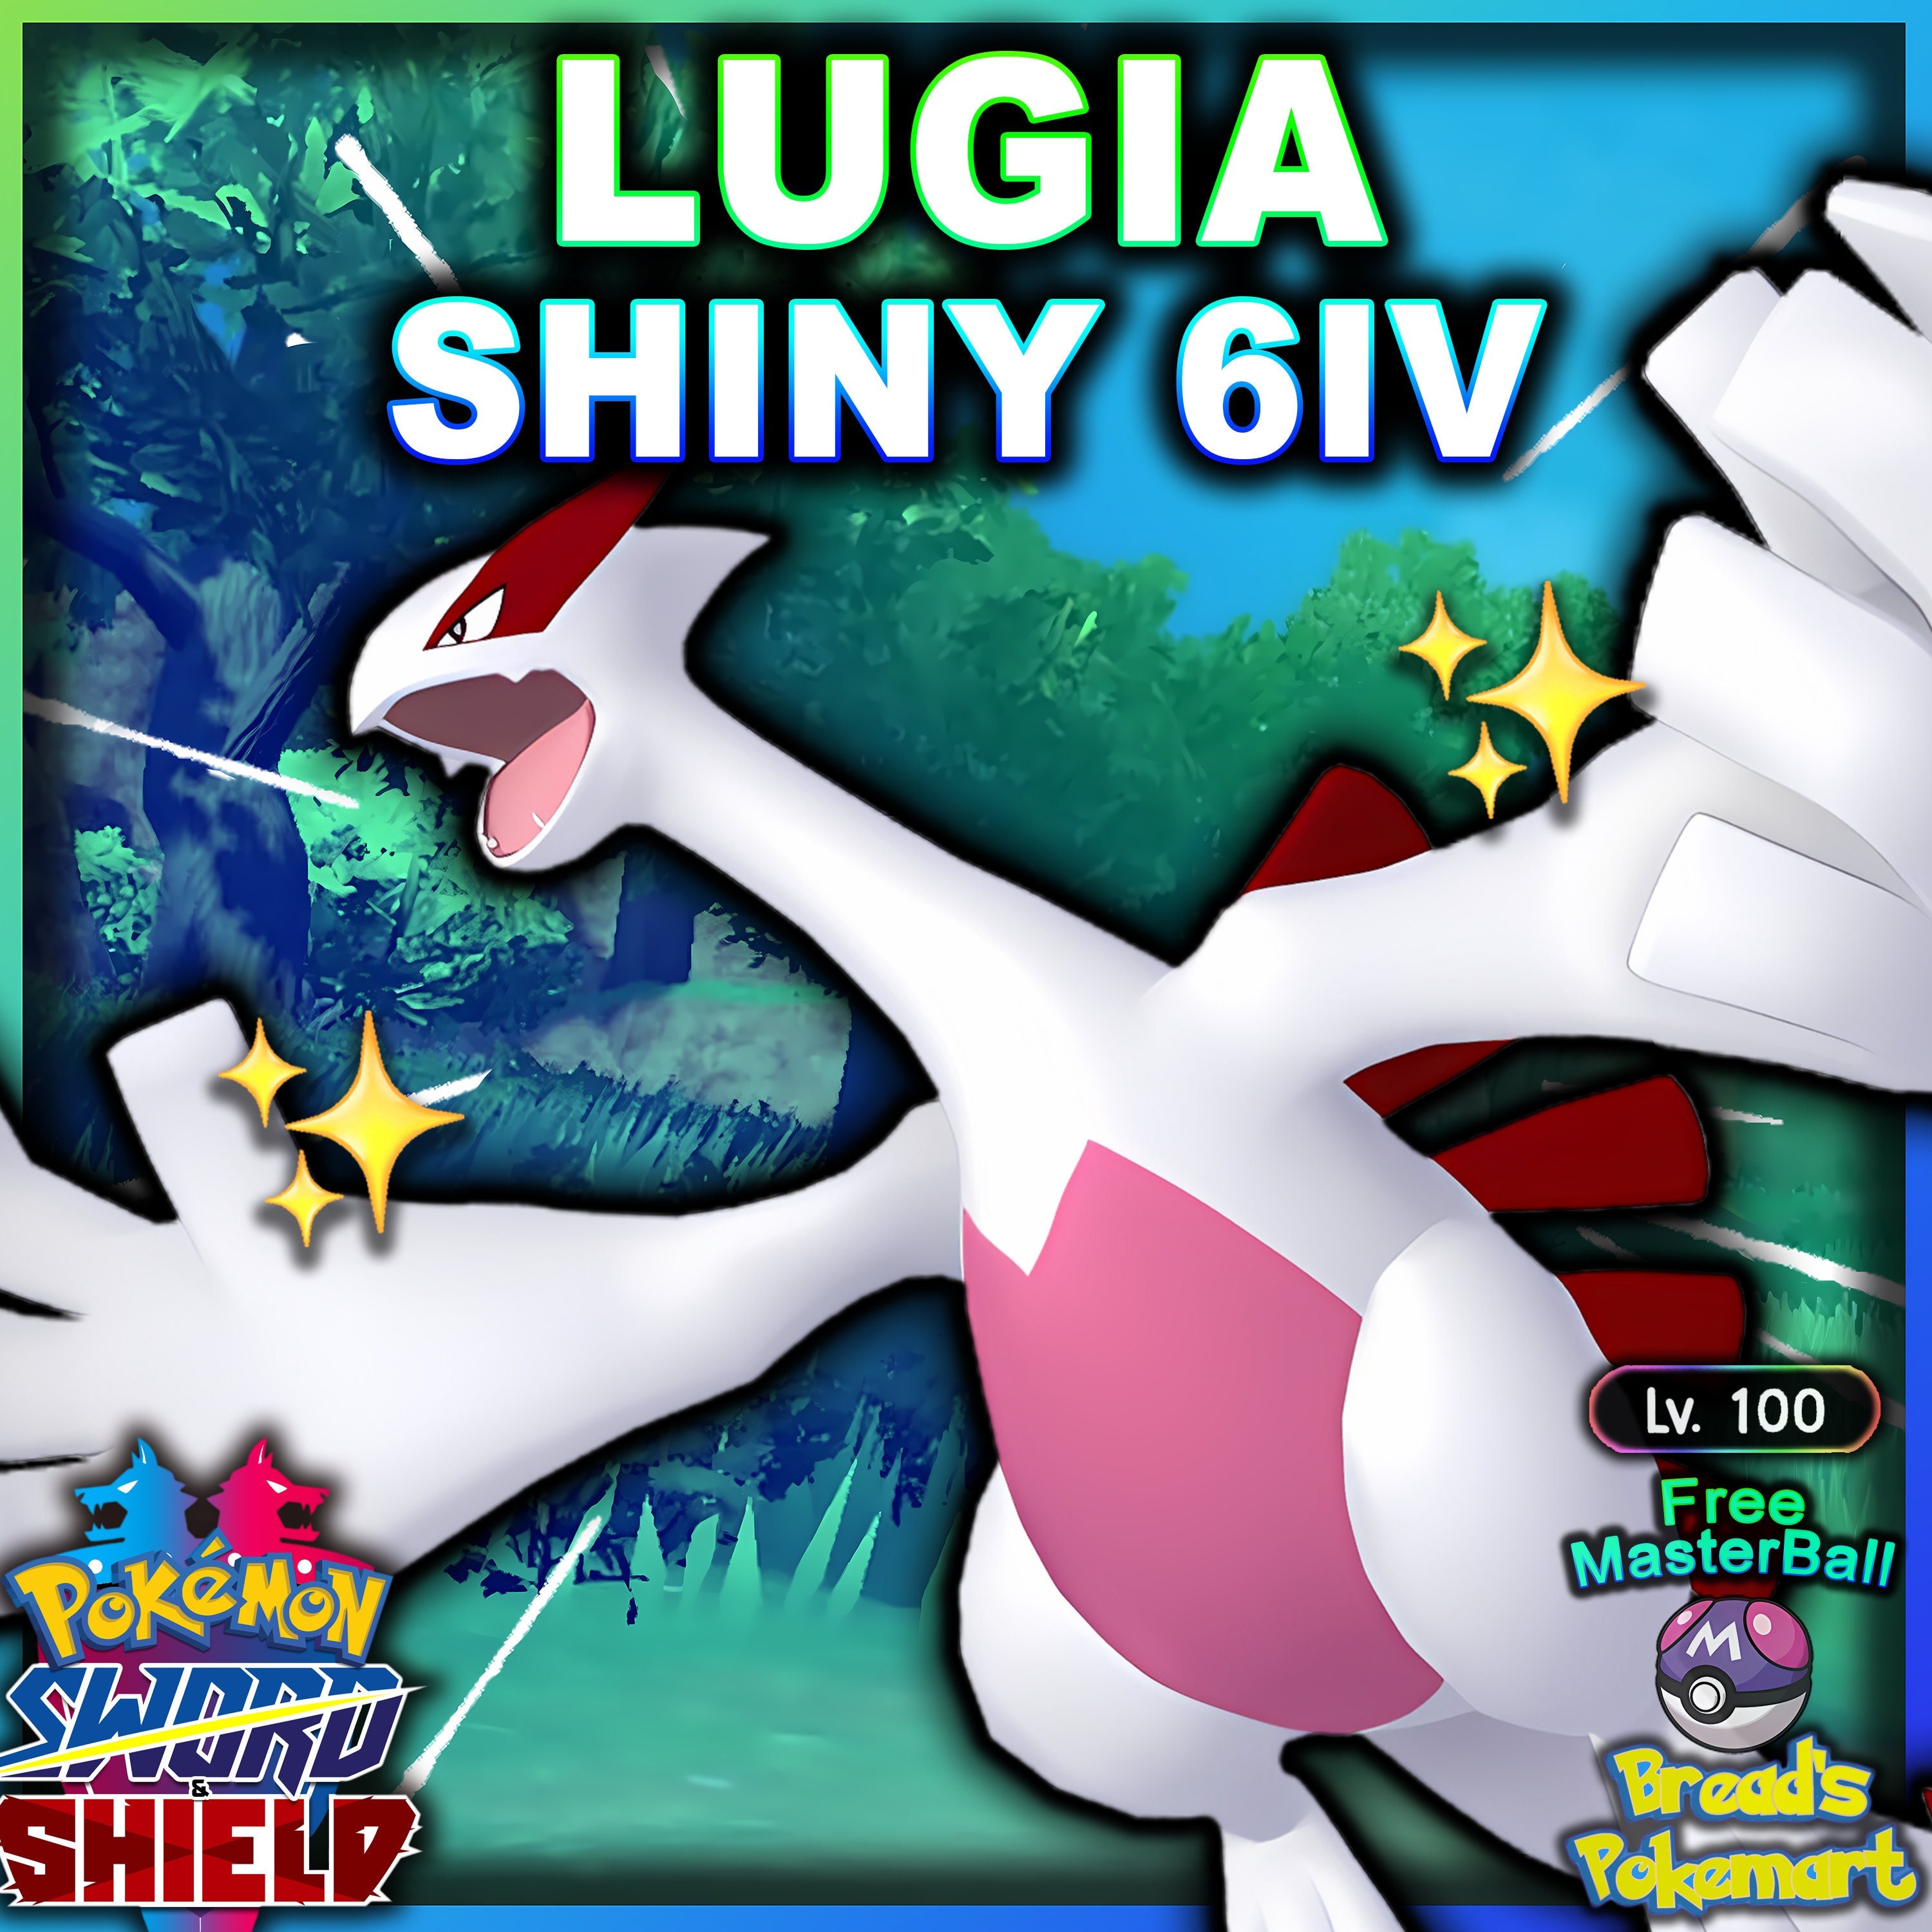 Pokemon Sword & Shield / Event Shiny Legendary Ho-oh Lugia